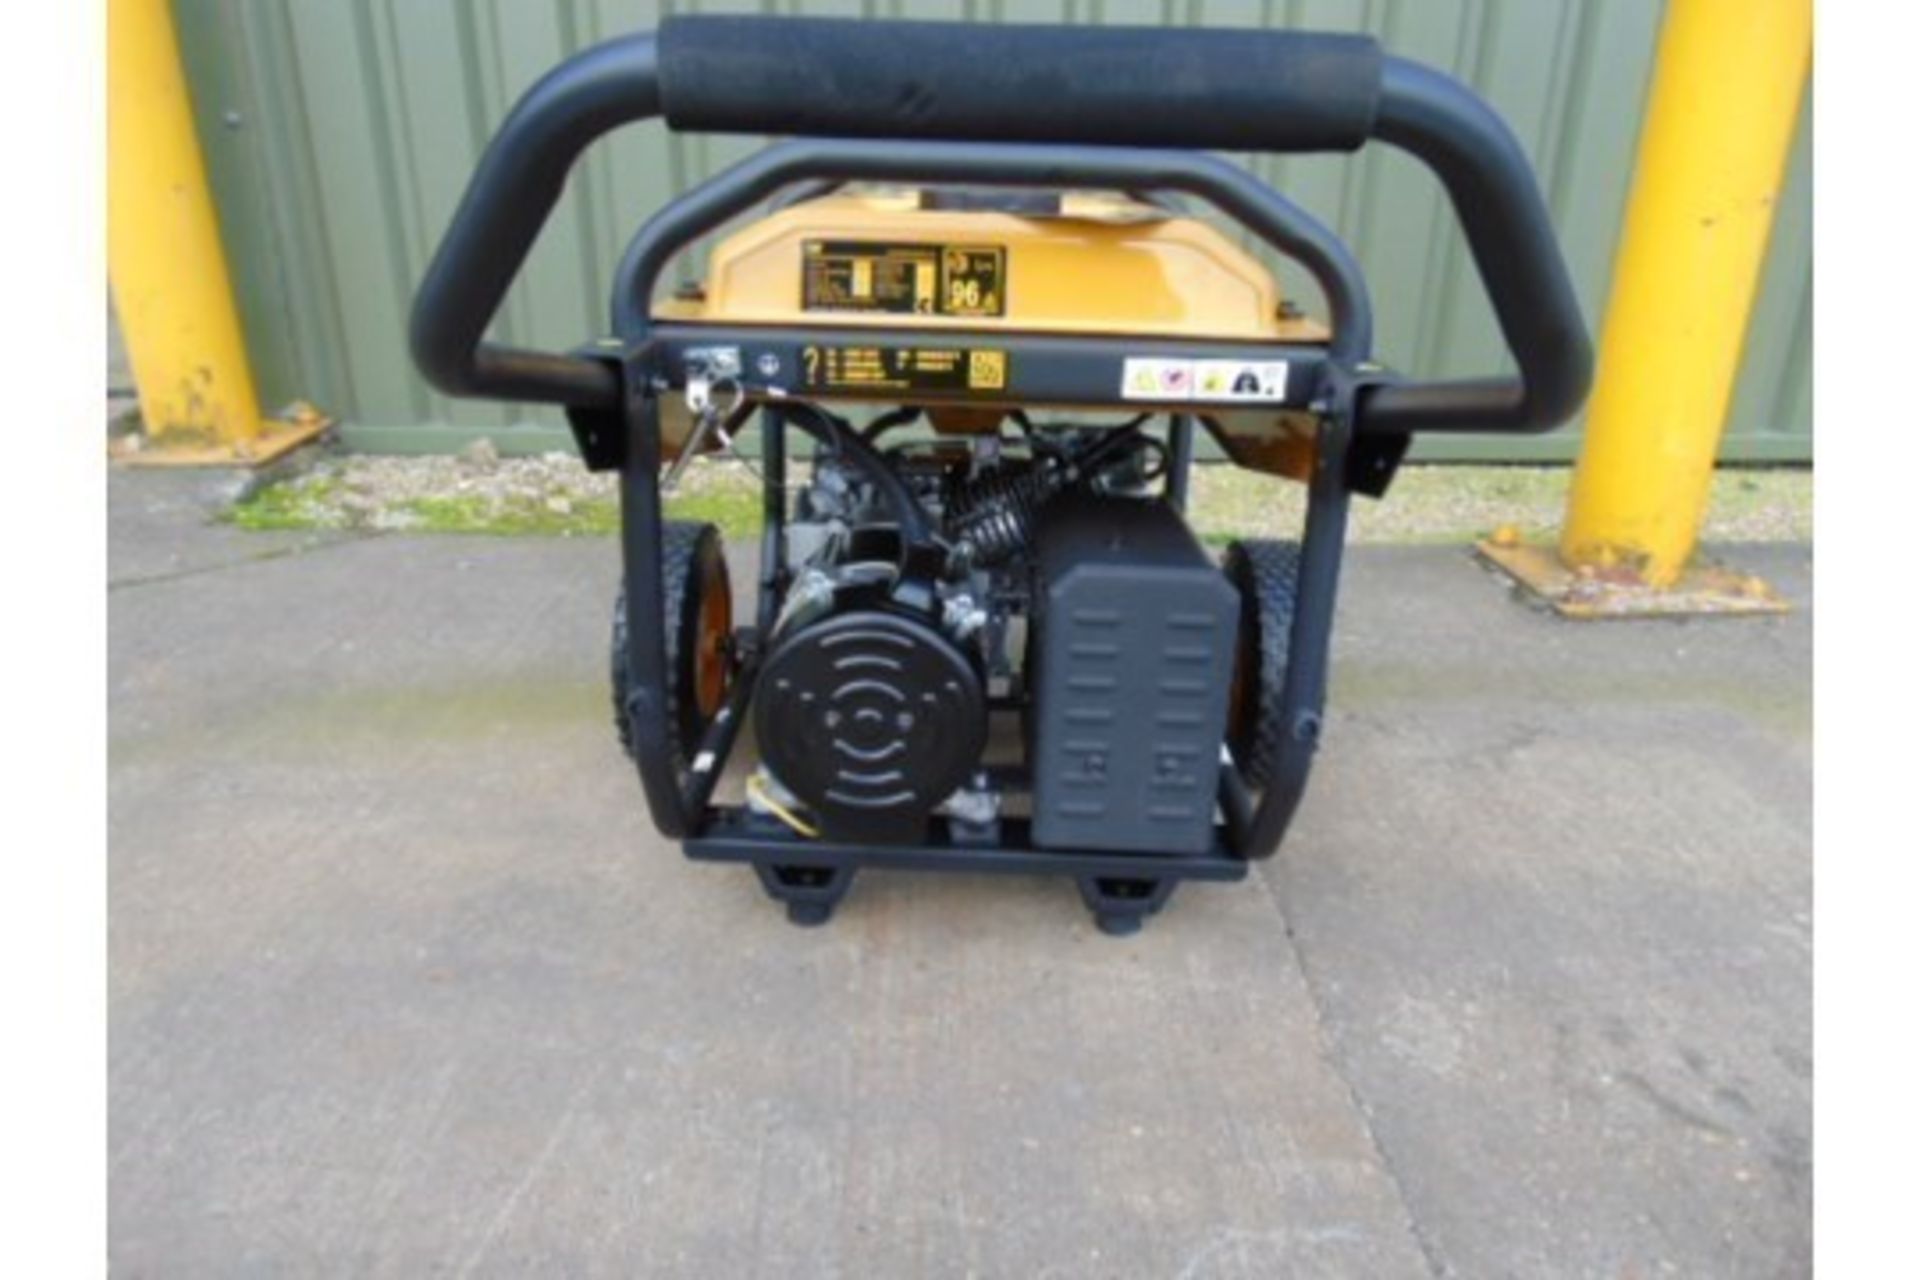 UNISSUED Caterpillar RP2500 Industrial Petrol Generator Set - Image 5 of 10